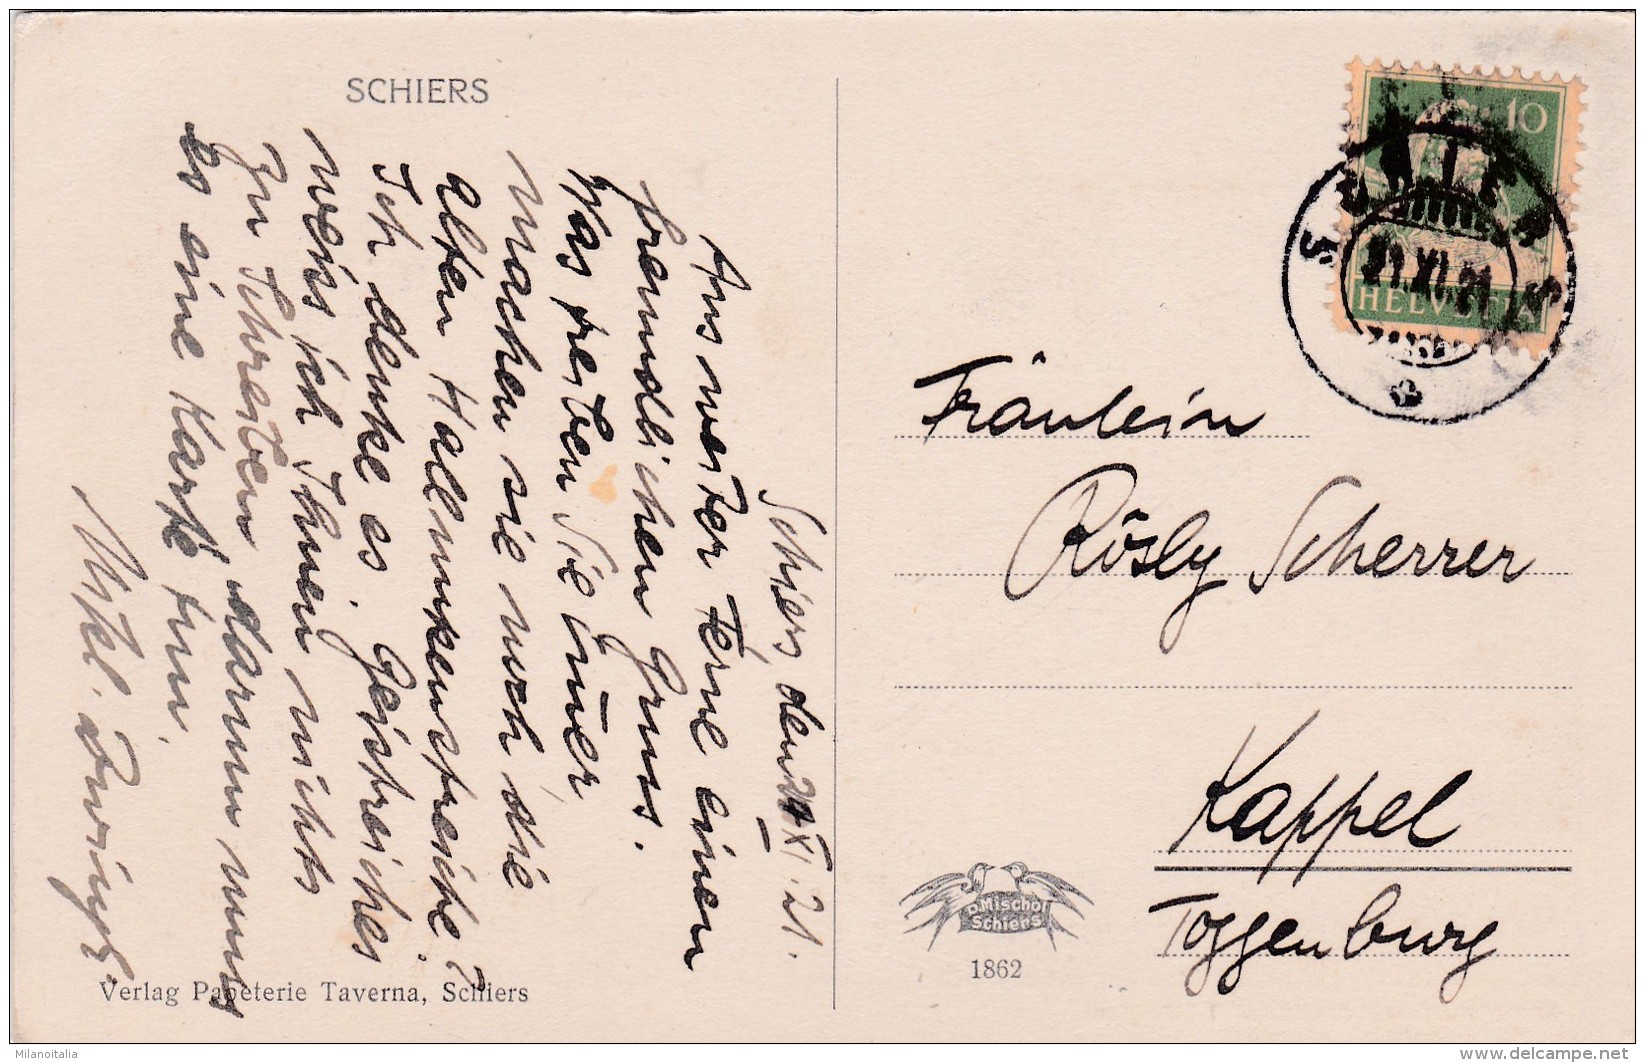 Bergfrühling (Gyrenspitz 2397 M) - Schiers (1862) * 21. XI. 1921 - Schiers